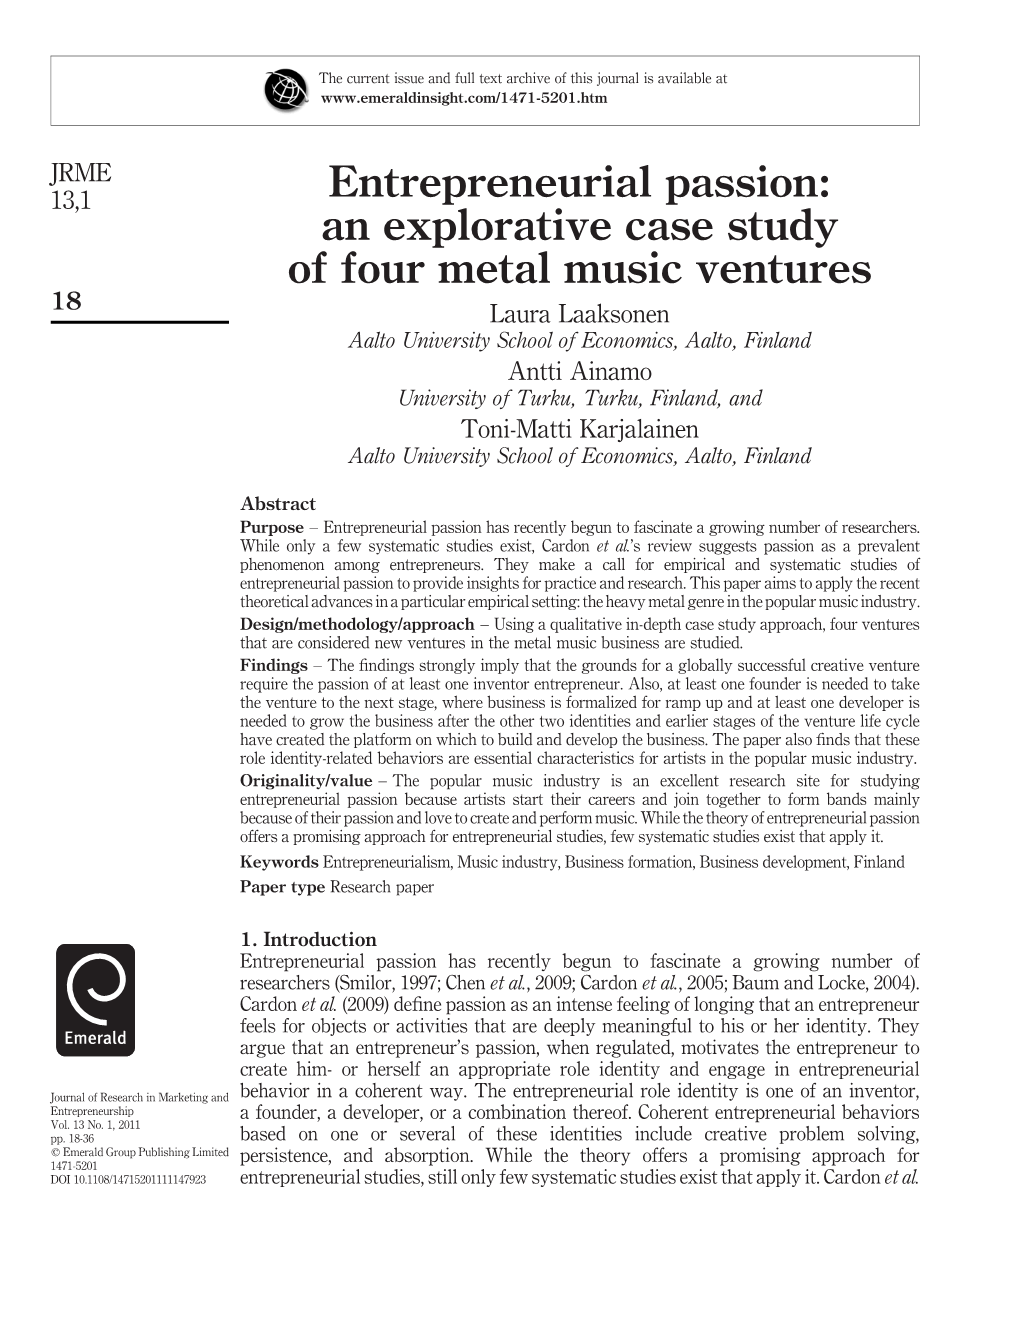 Entrepreneurial Passion